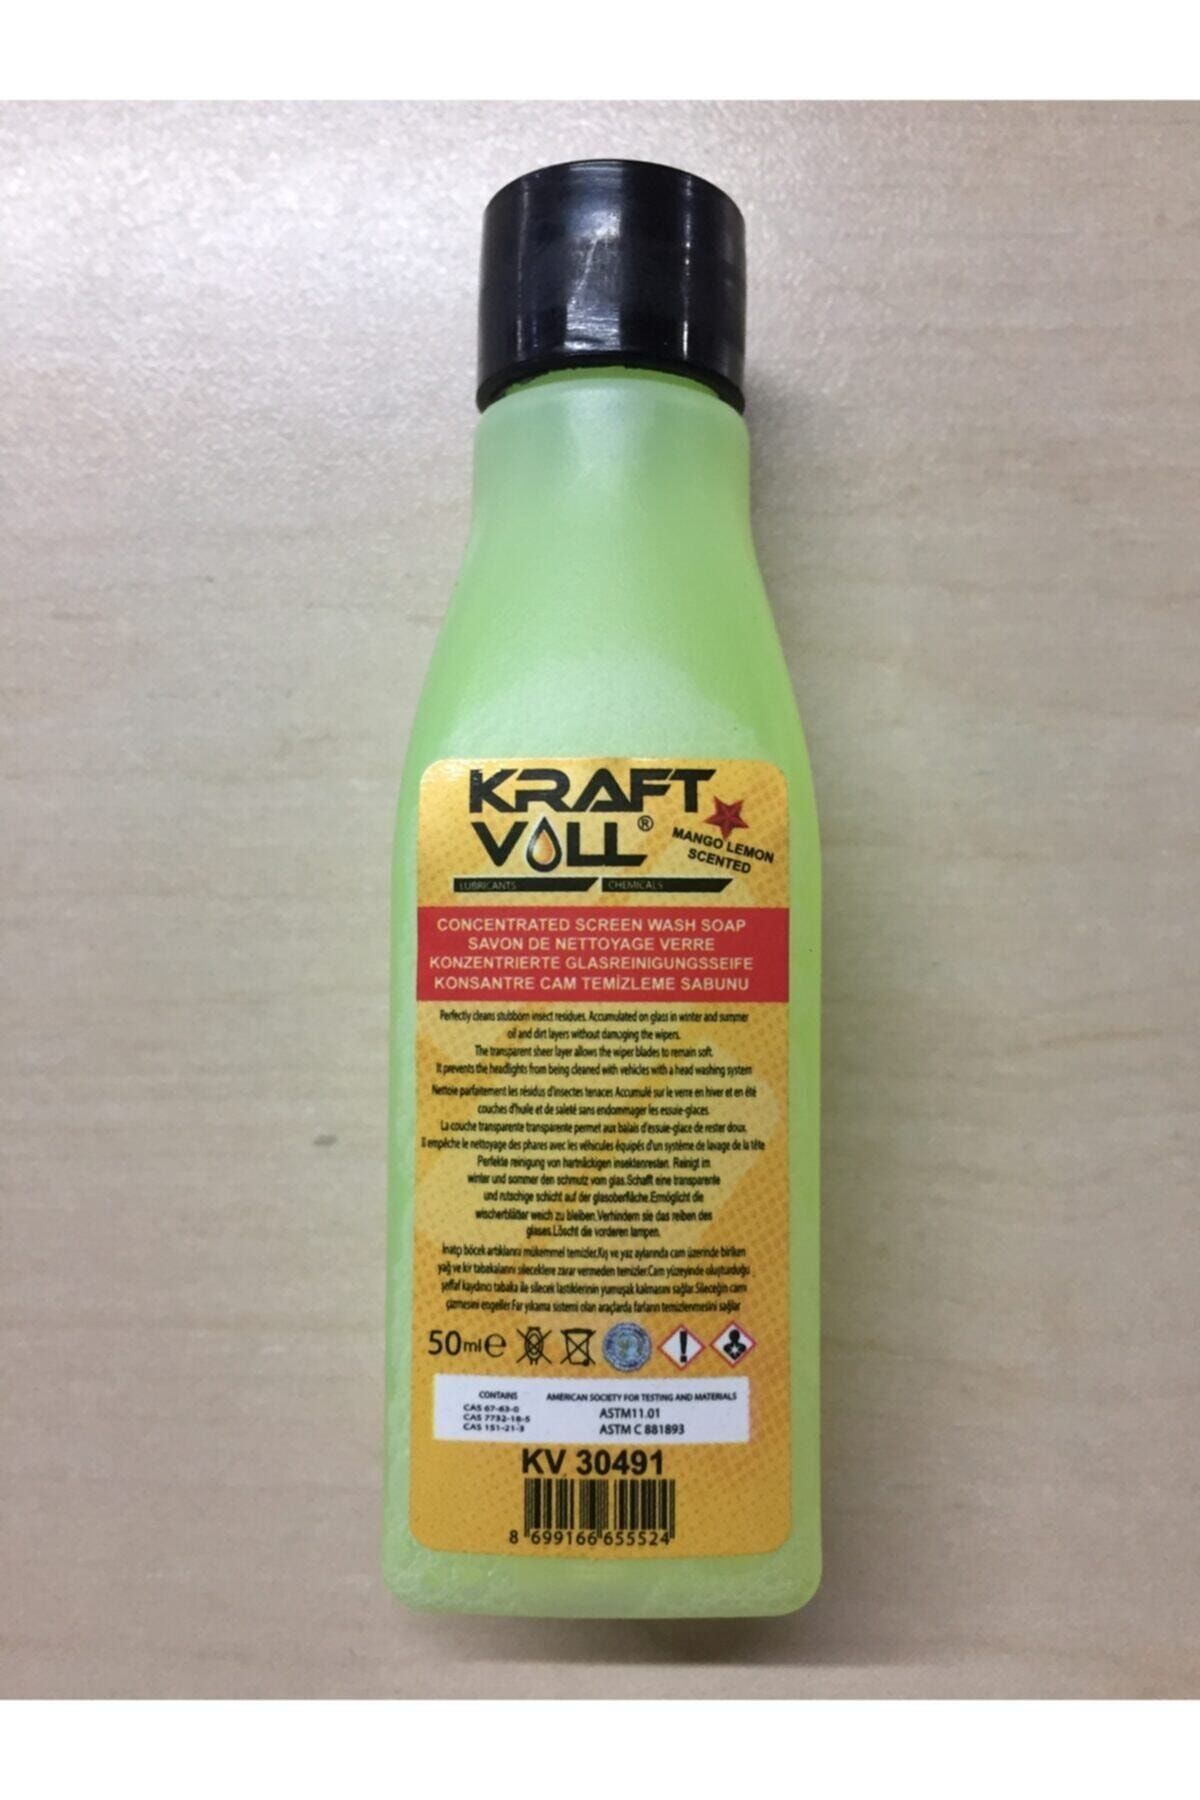 Kraftvoll - Konsantre Cam Yıkama Sabunu Parfümlü 50ml Kv 30491